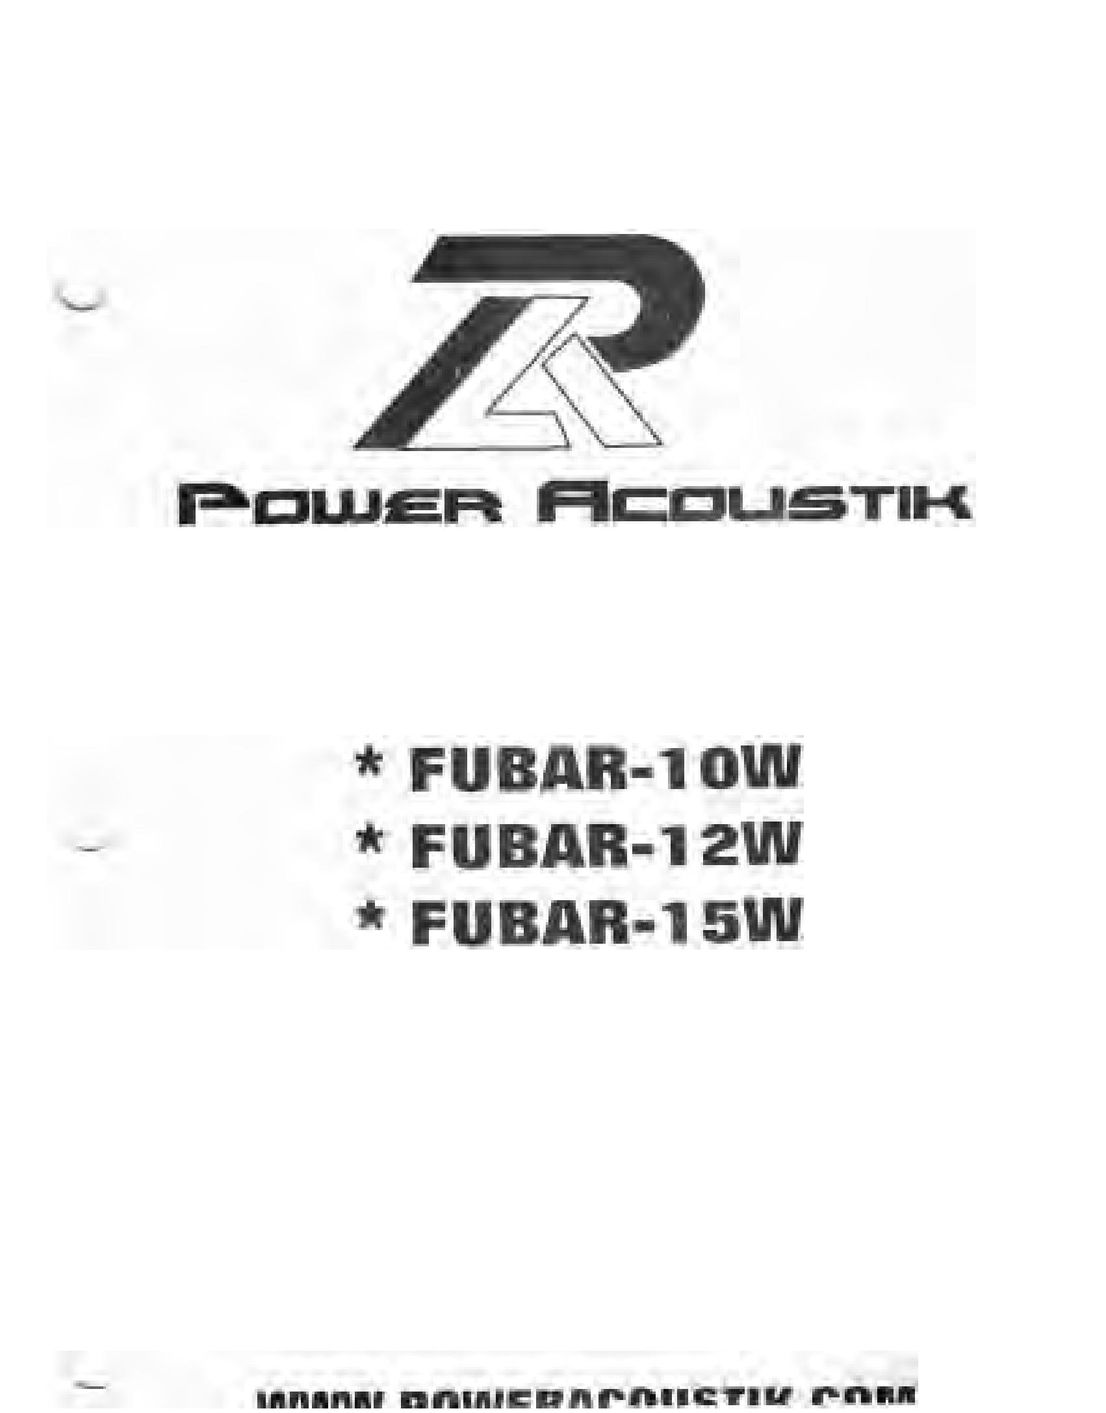 Power Acoustik FUBAR-10W Car Speaker User Manual